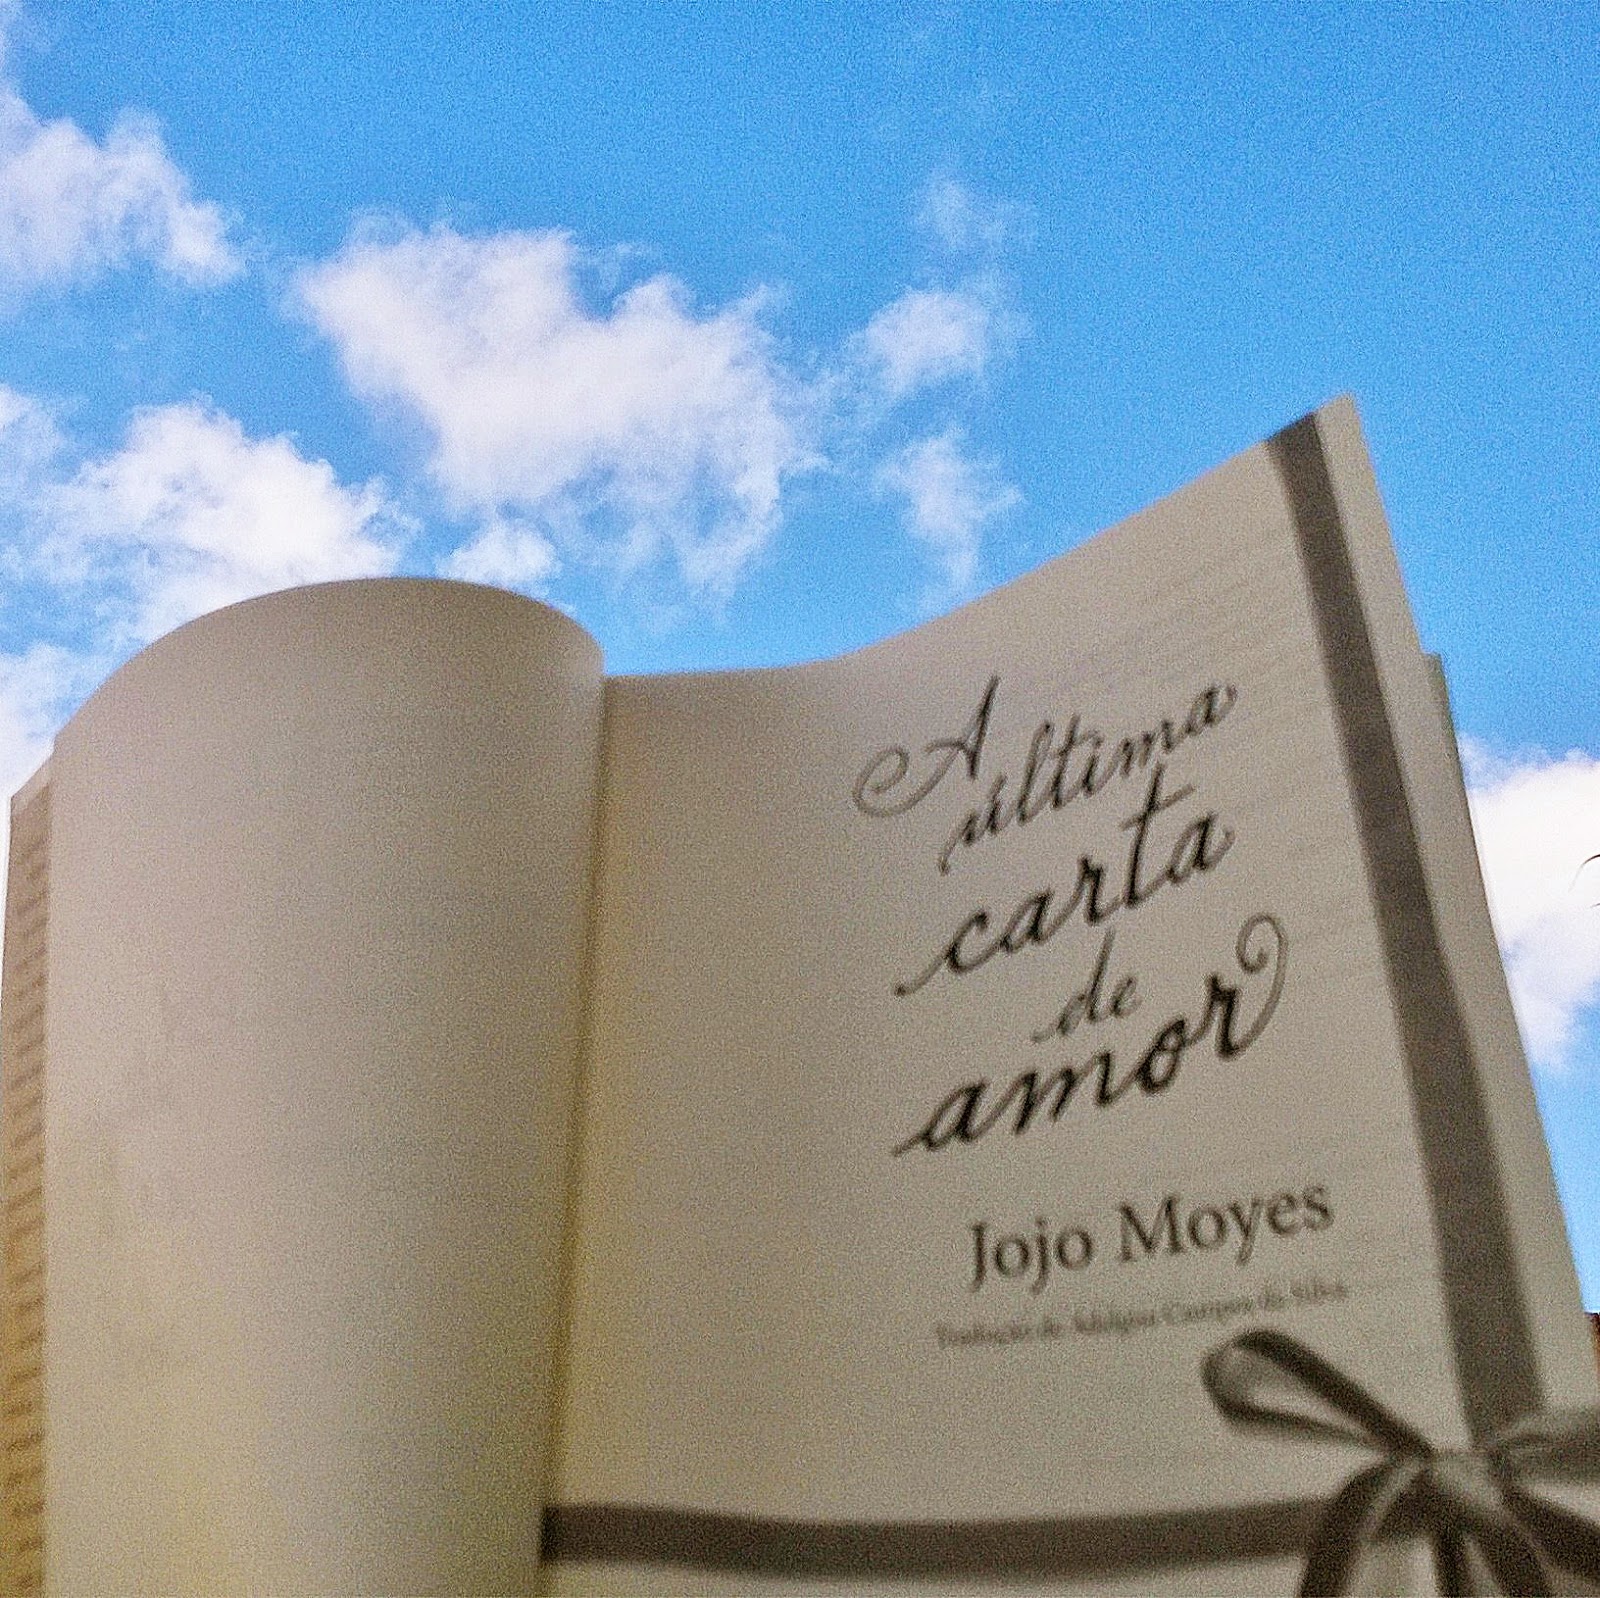 Photobook Project A última Carta De Amor Jojo Moyes Postando